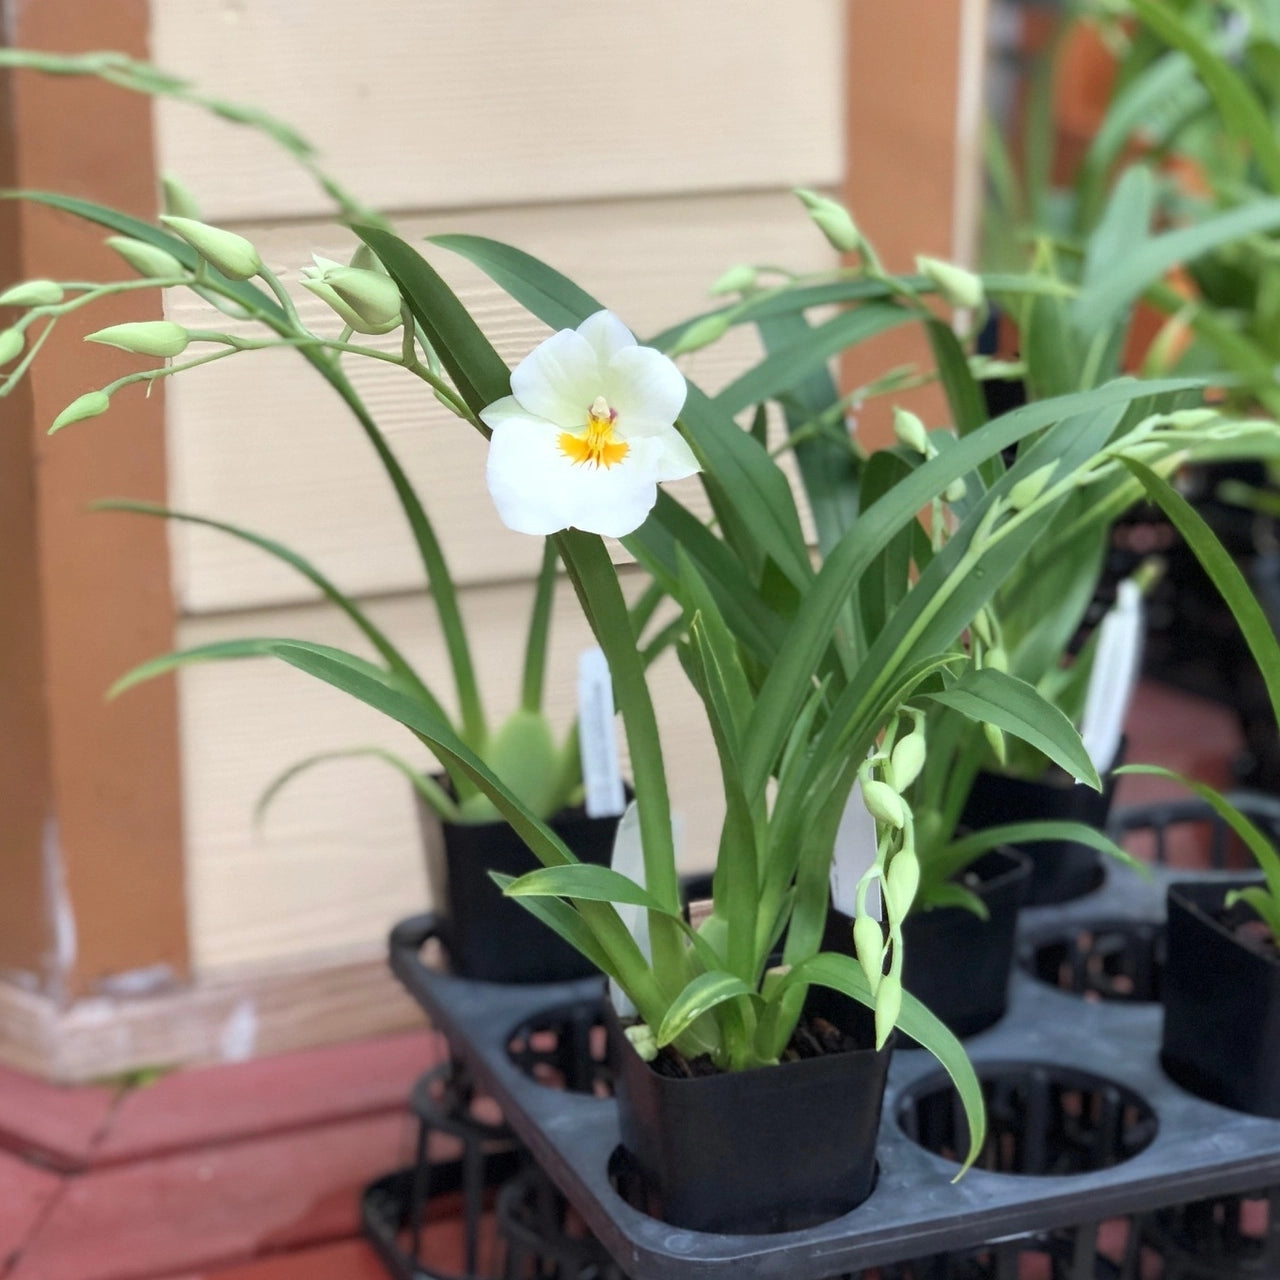 Miltoniopsis Golden Snows ‘White Light’ Comes in 4" Pot